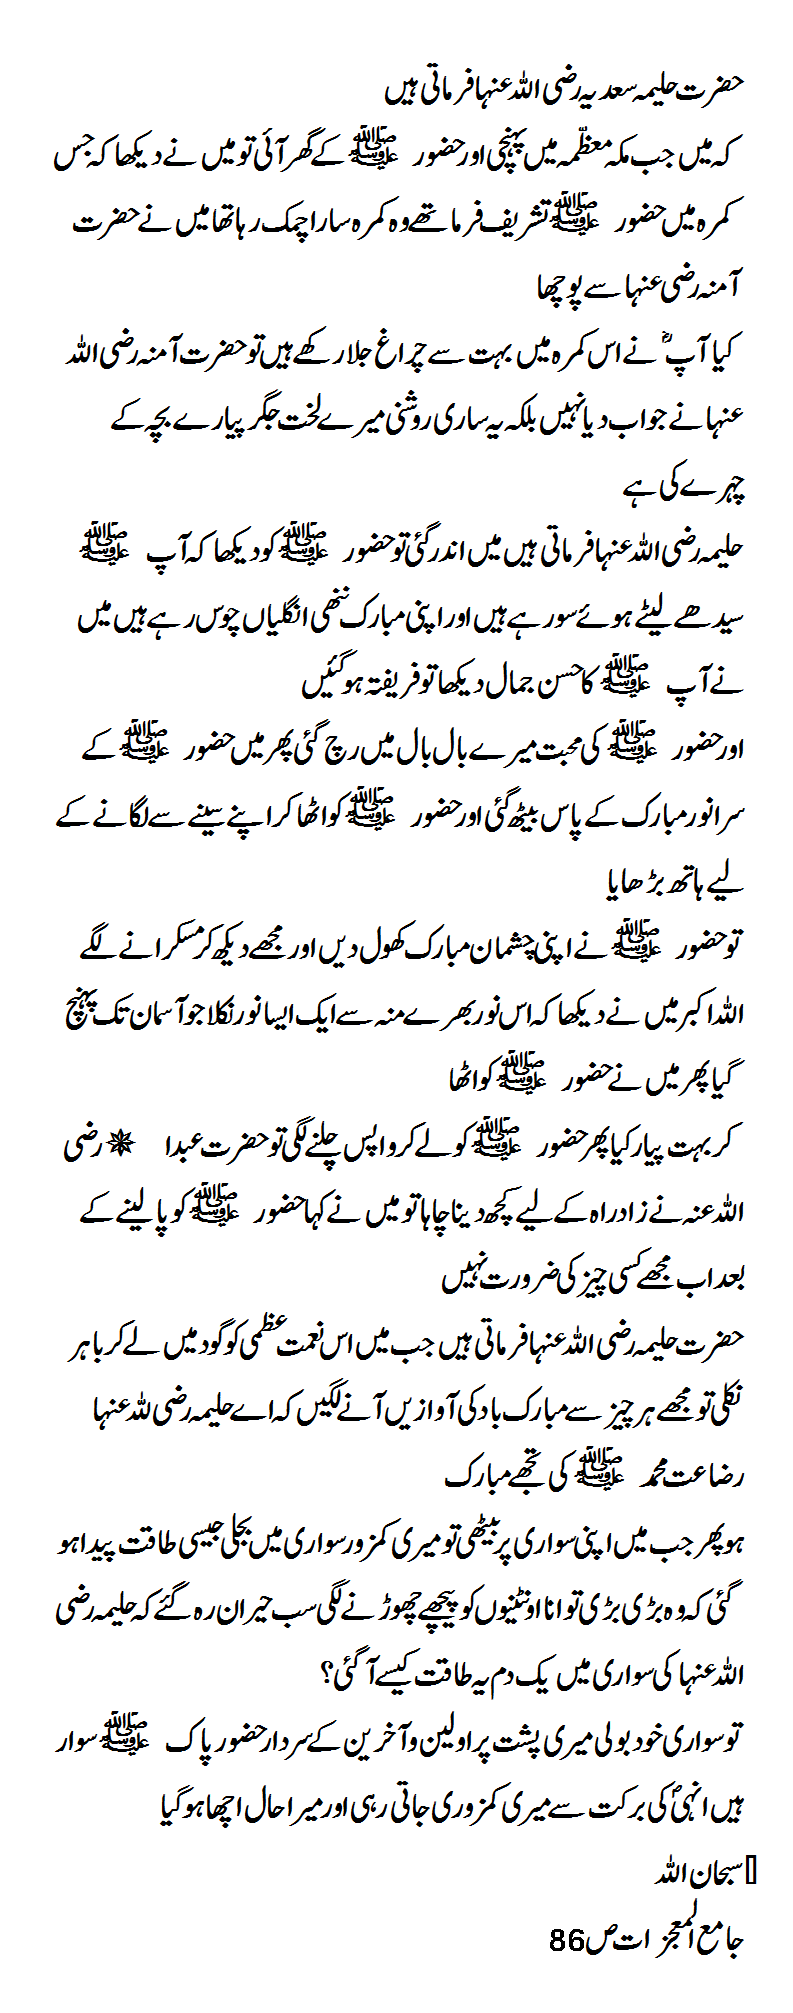 Hazrat Halima Sadia (RA) says: